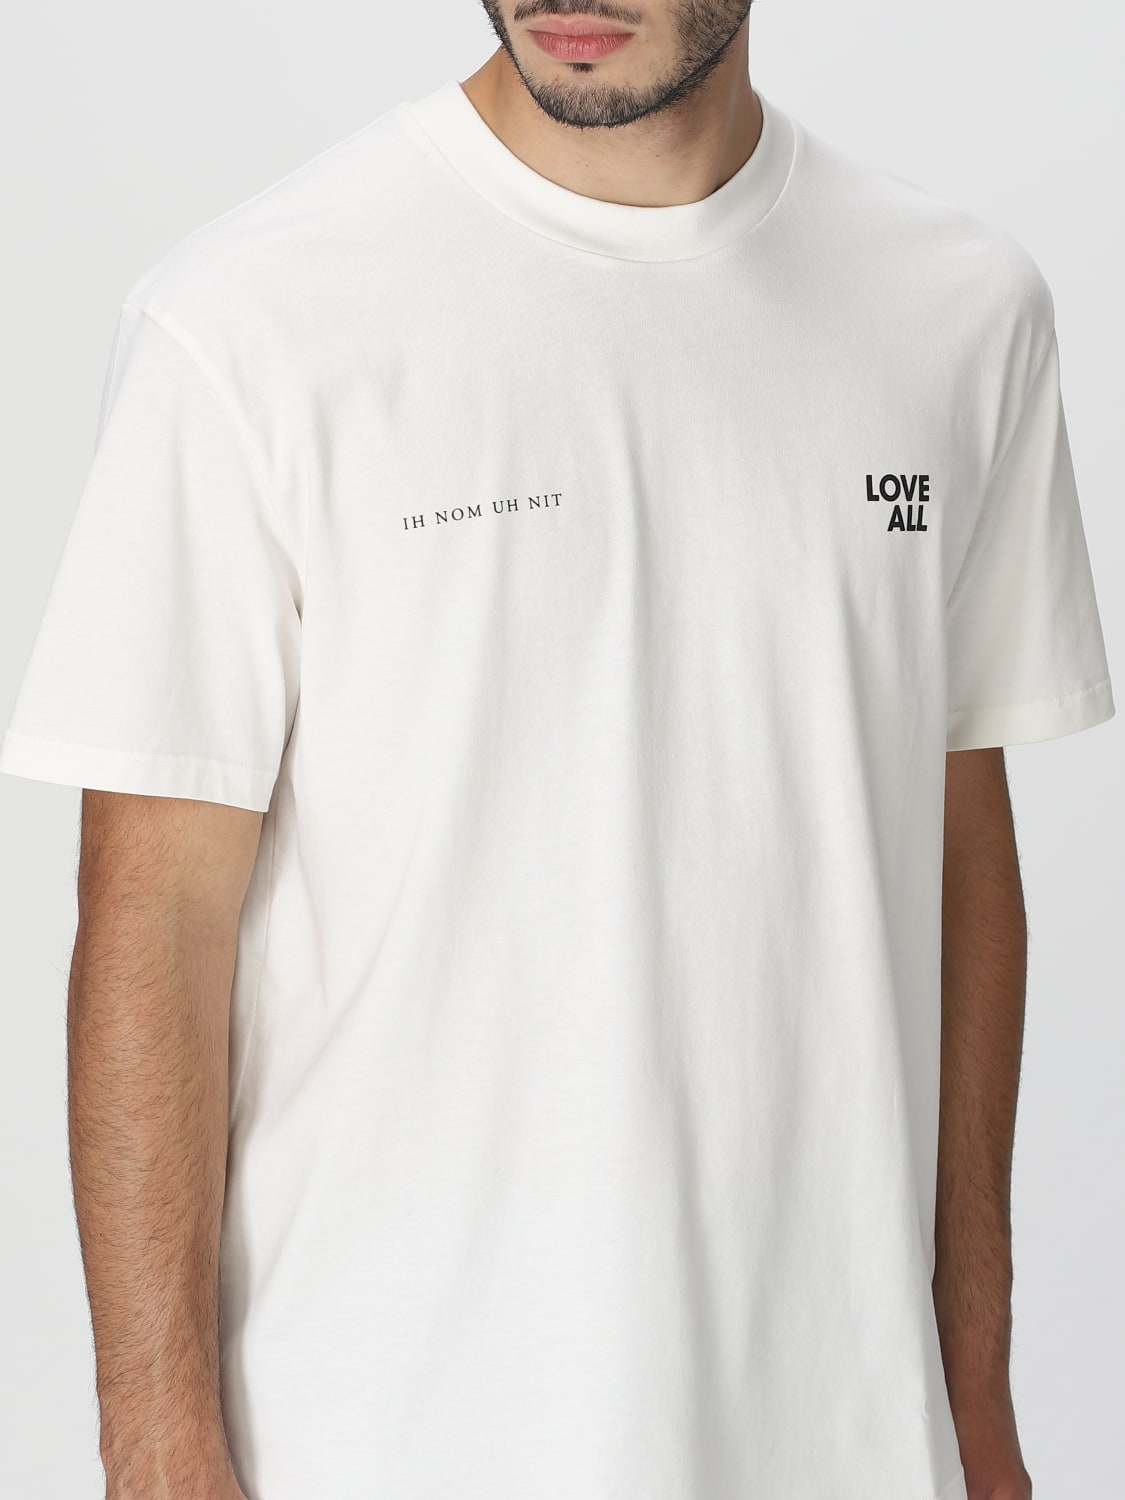 IH NOM UH NIT: t-shirt for man - Beige | Ih Nom Uh Nit t-shirt NUS23224 ...